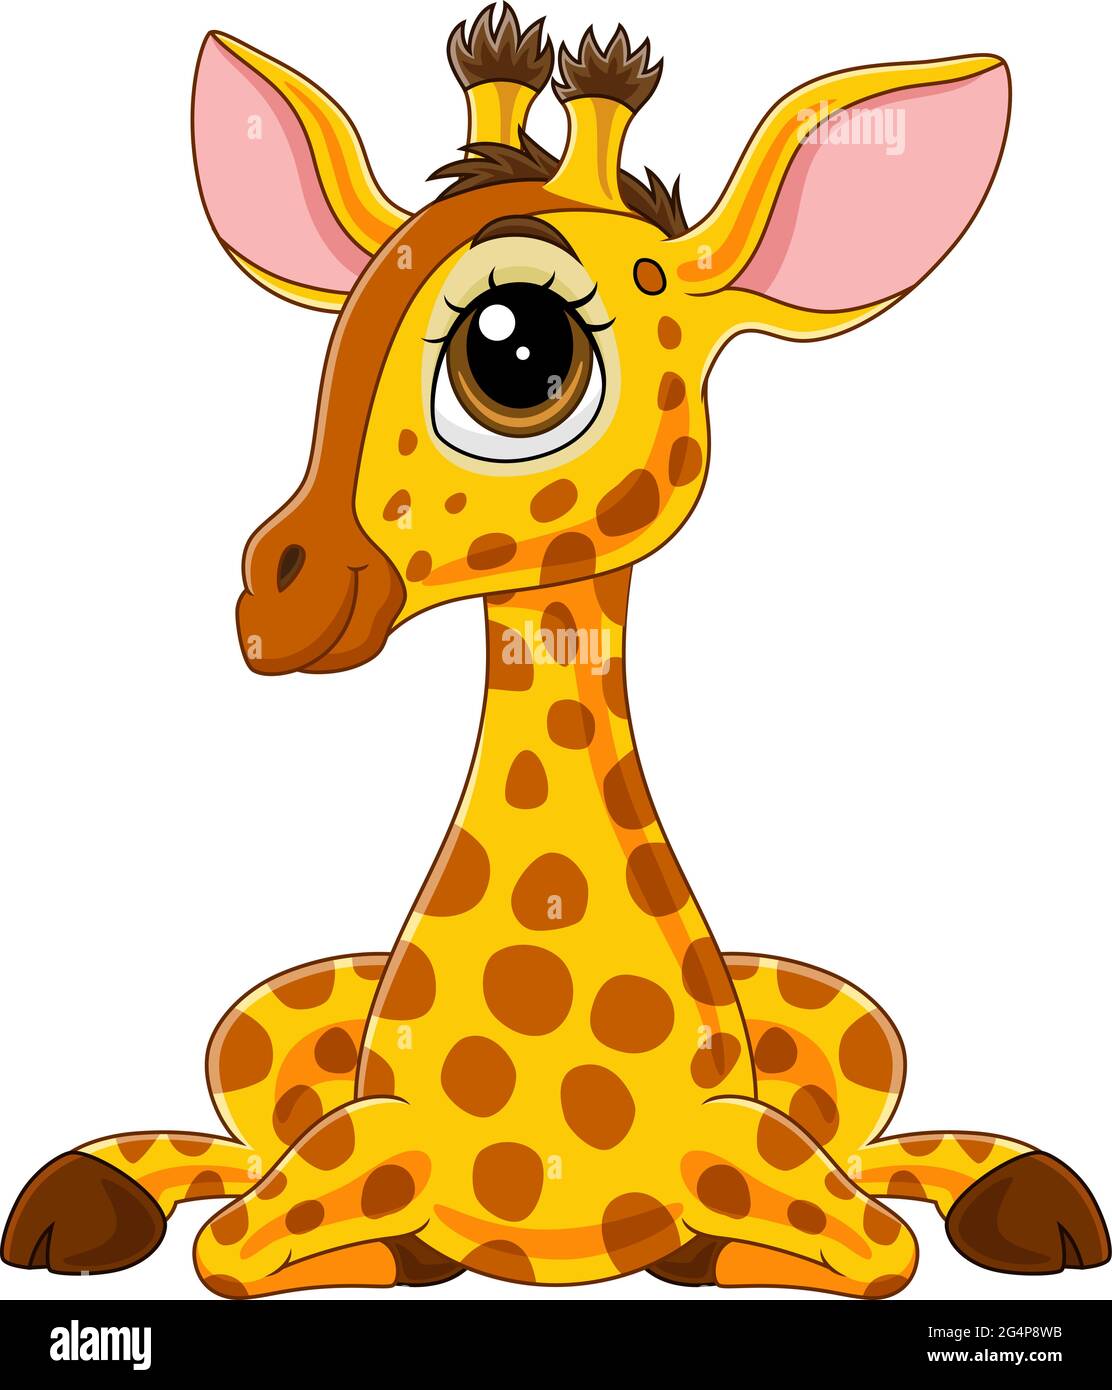 Cute baby giraffe Stock Vector Images - Alamy